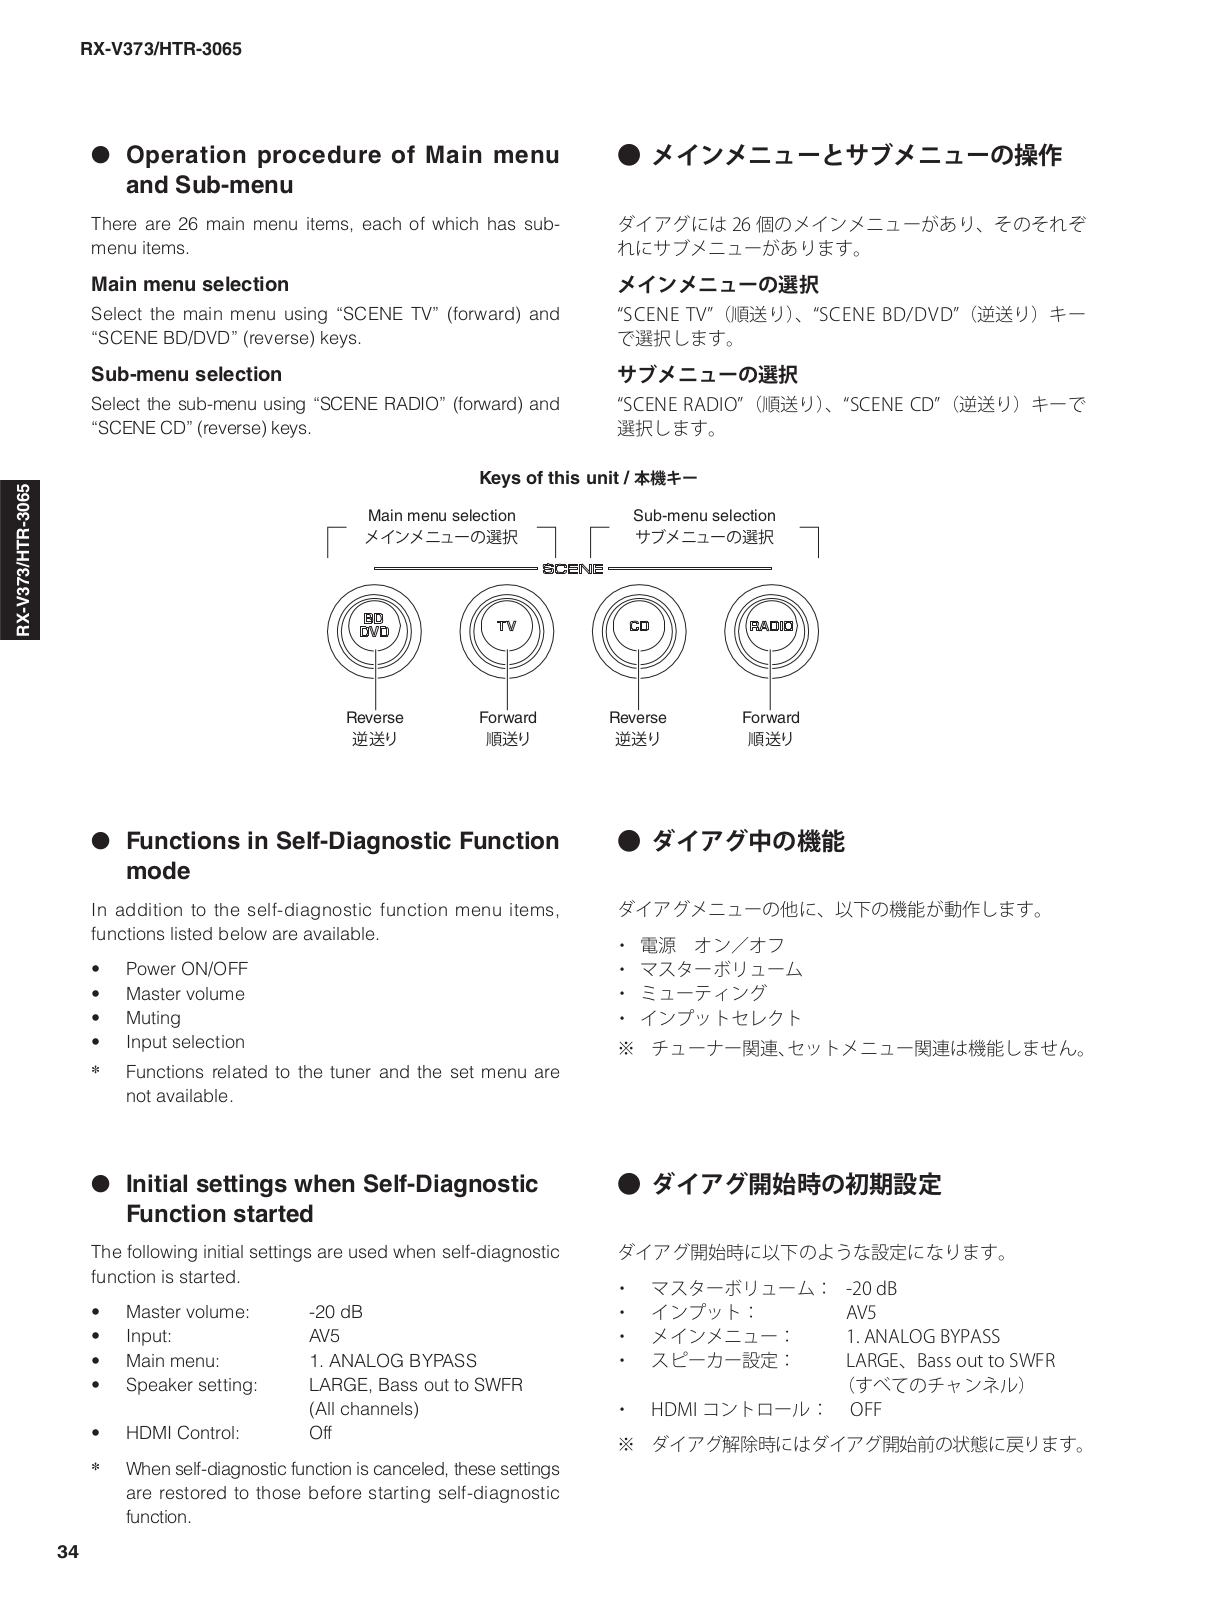 Yamaha RX-V373, HTR-3065 Service manual